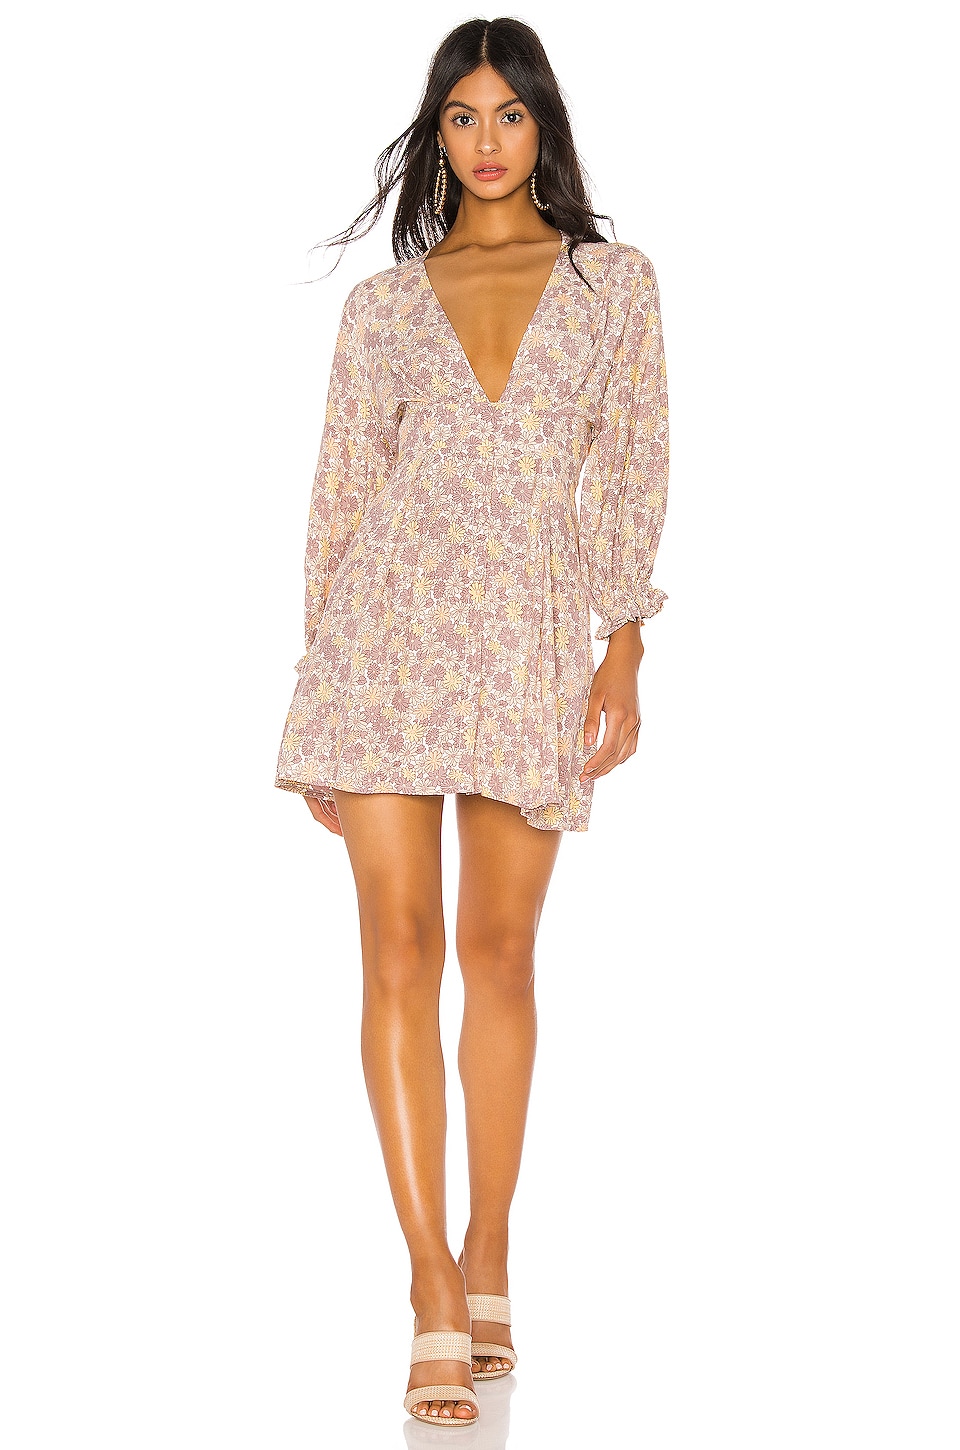 FAITHFULL THE BRAND Palmaro Mini Dress in Zoella Floral | REVOLVE